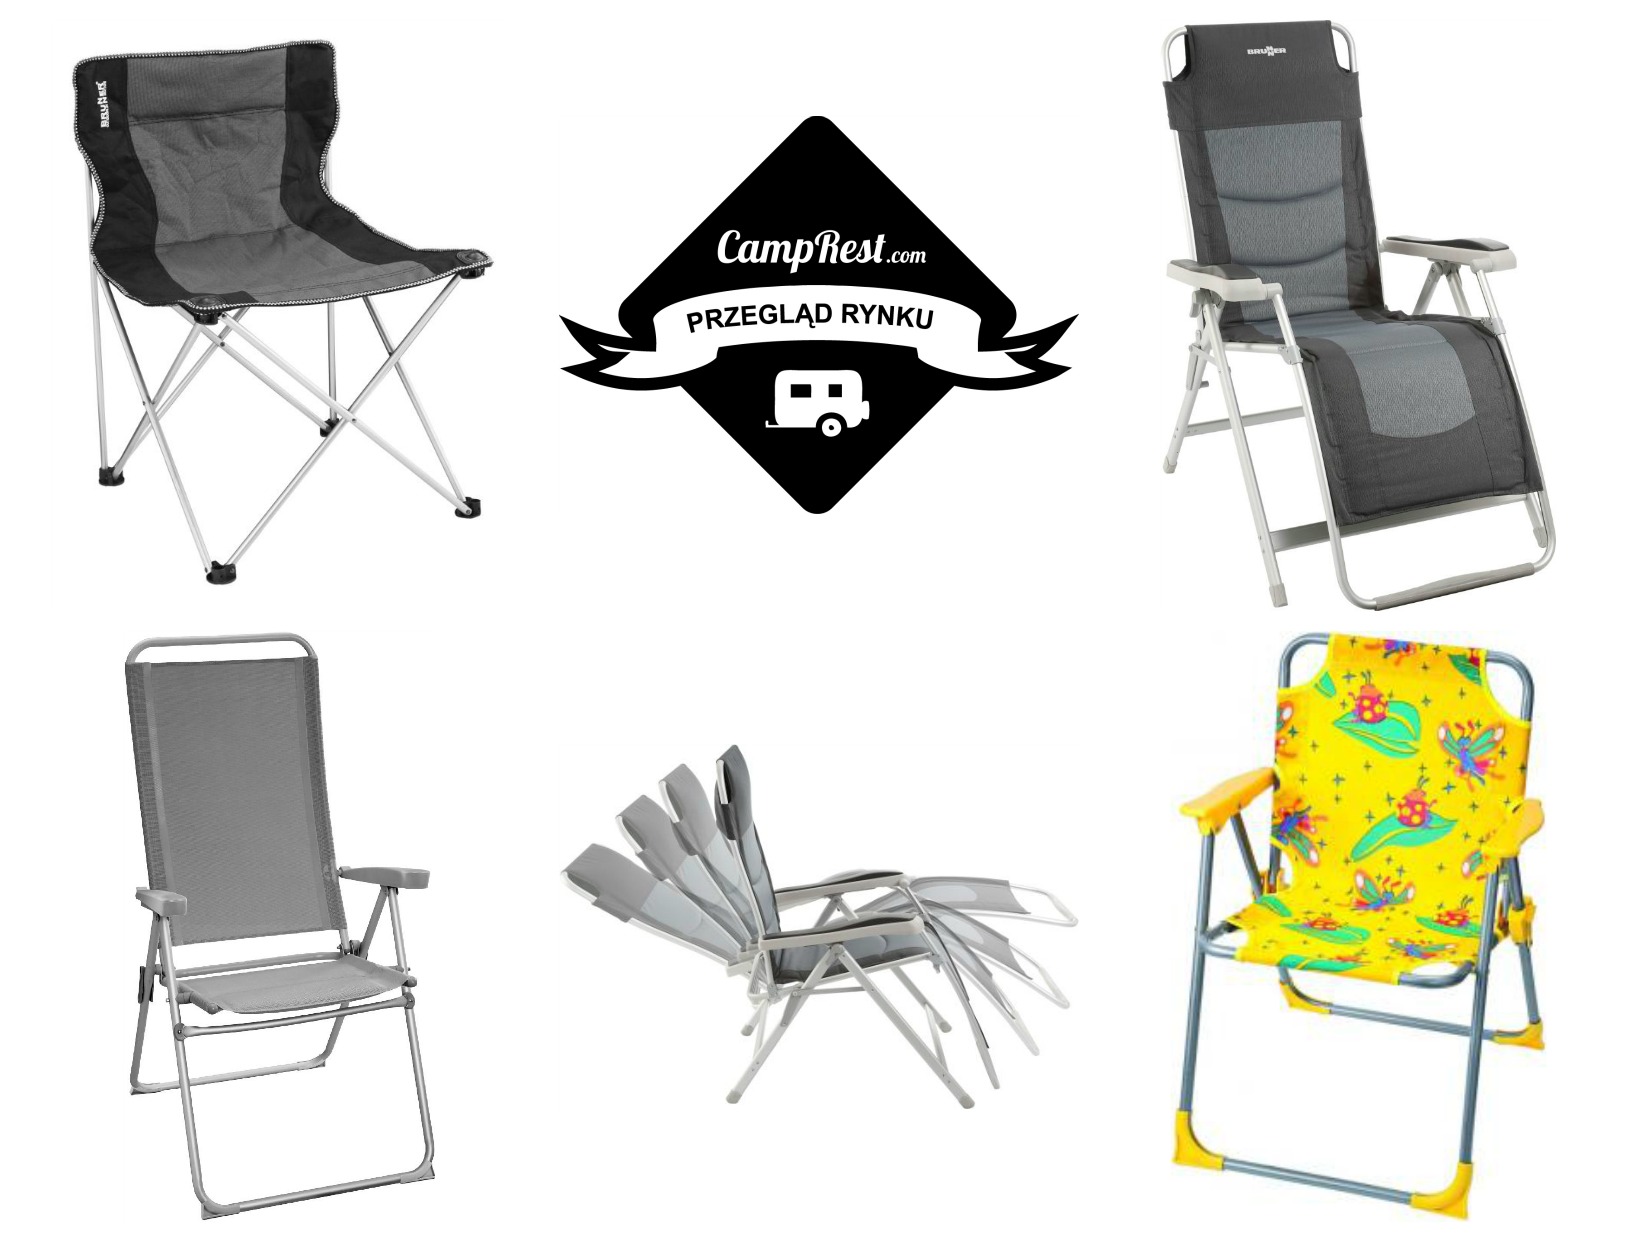 Comfortable camping chair – main image